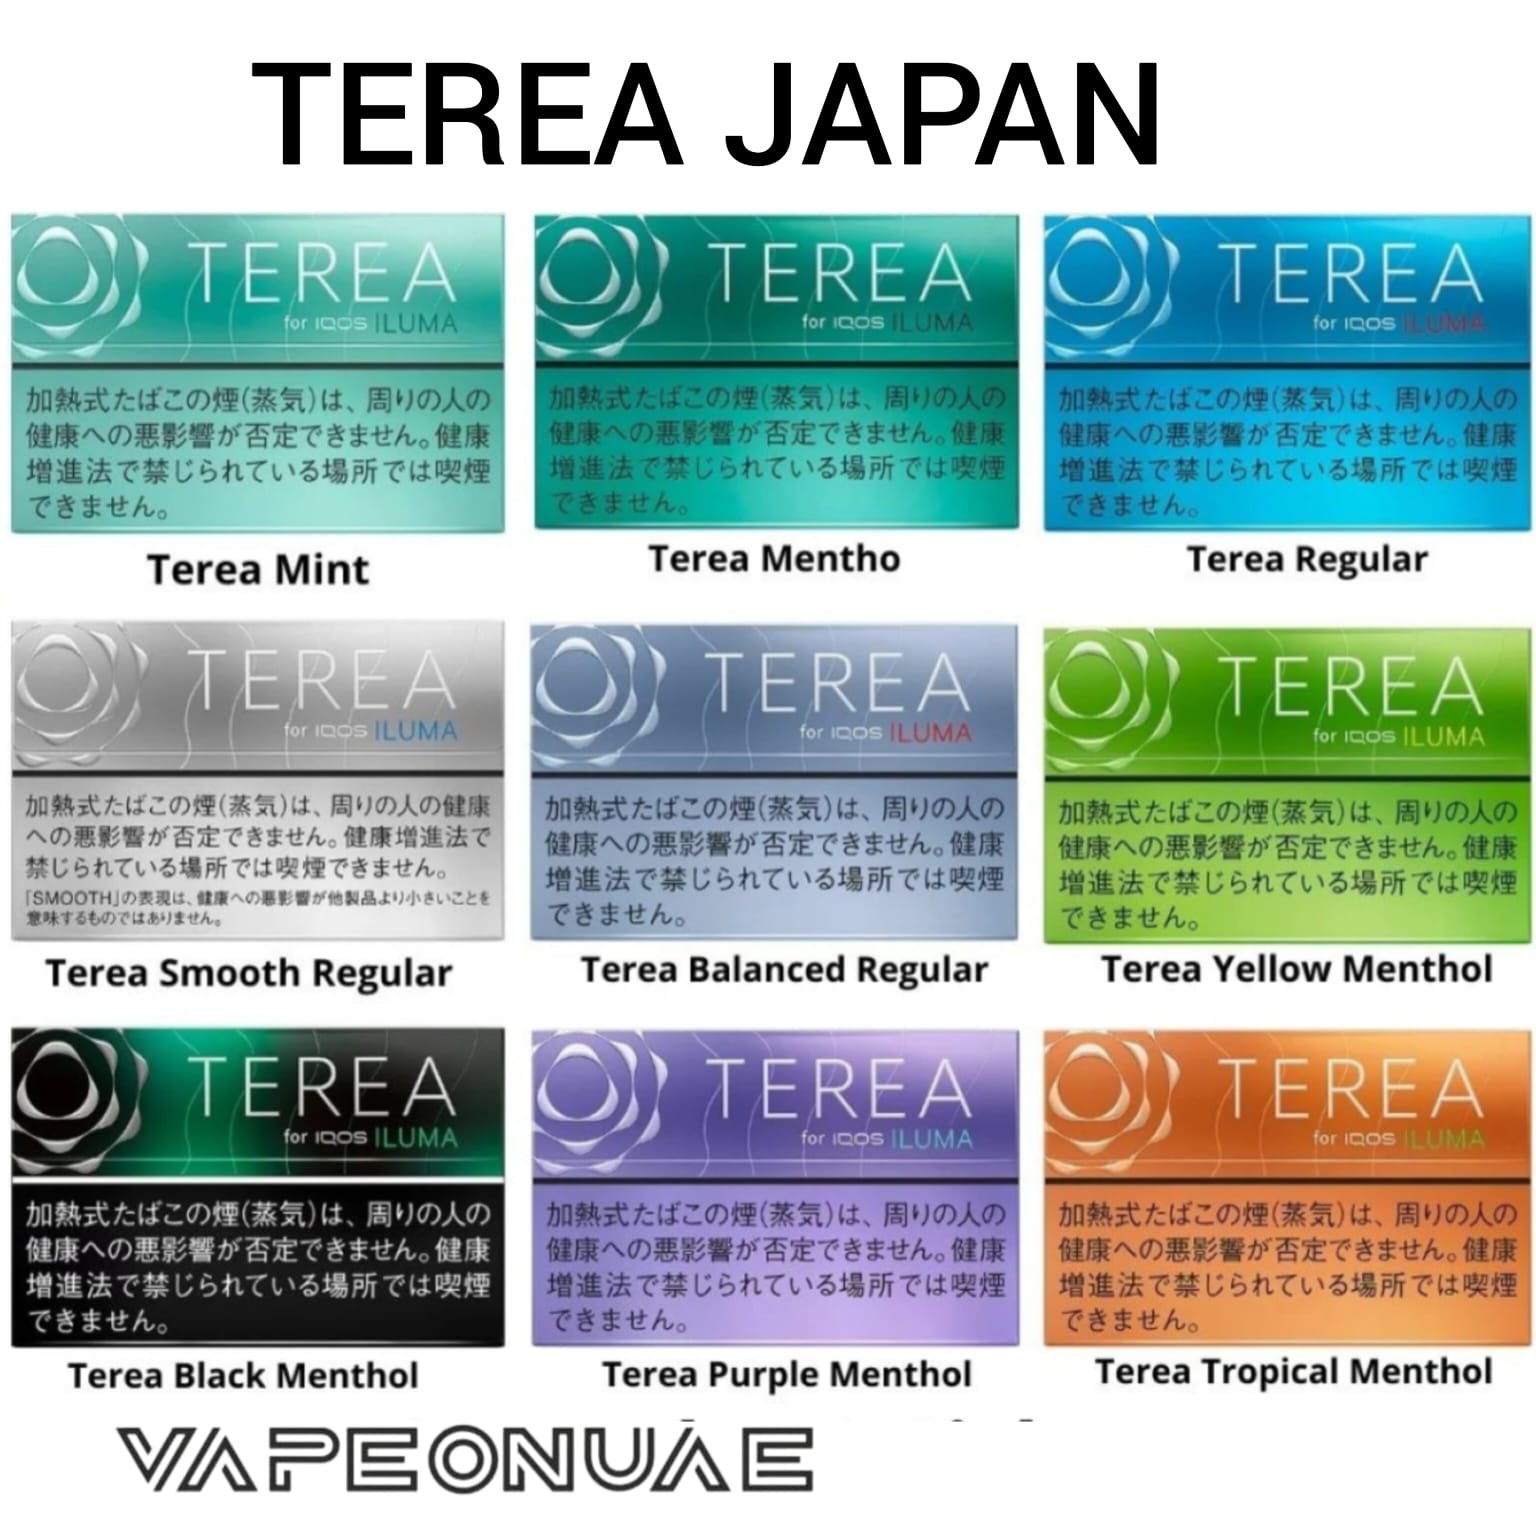 IQOS TEREA JAPAN Flavors - , Best For ILUMA